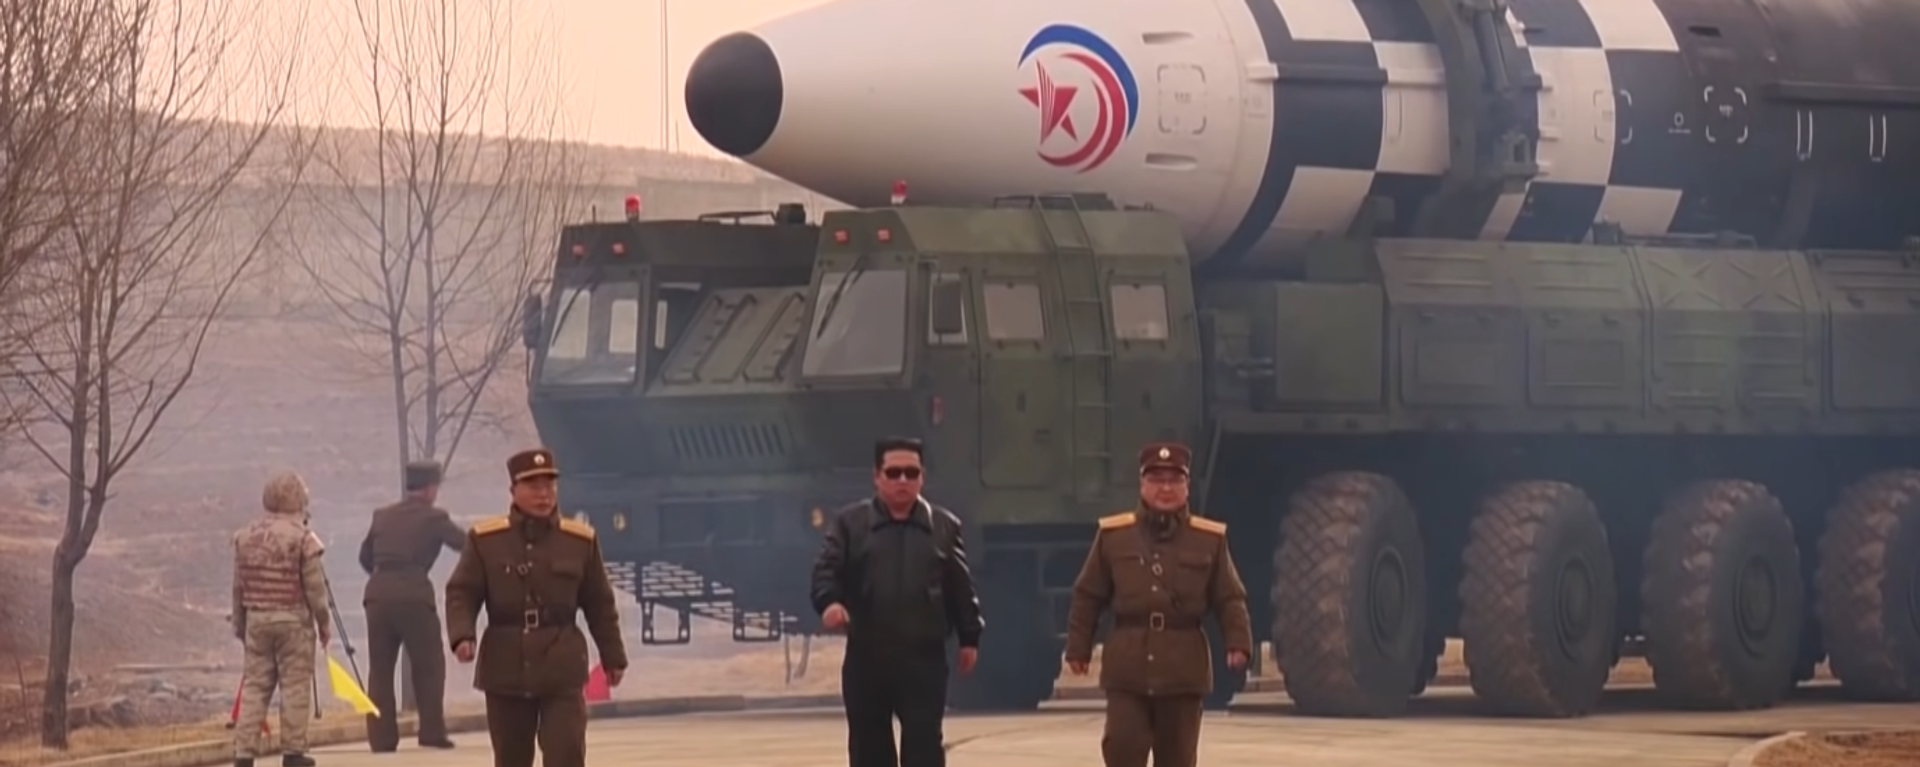 North Korean leader Kim Jong-un takes part in launch of heavy intercontinental ballistic missile test. - Sputnik International, 1920, 18.11.2022